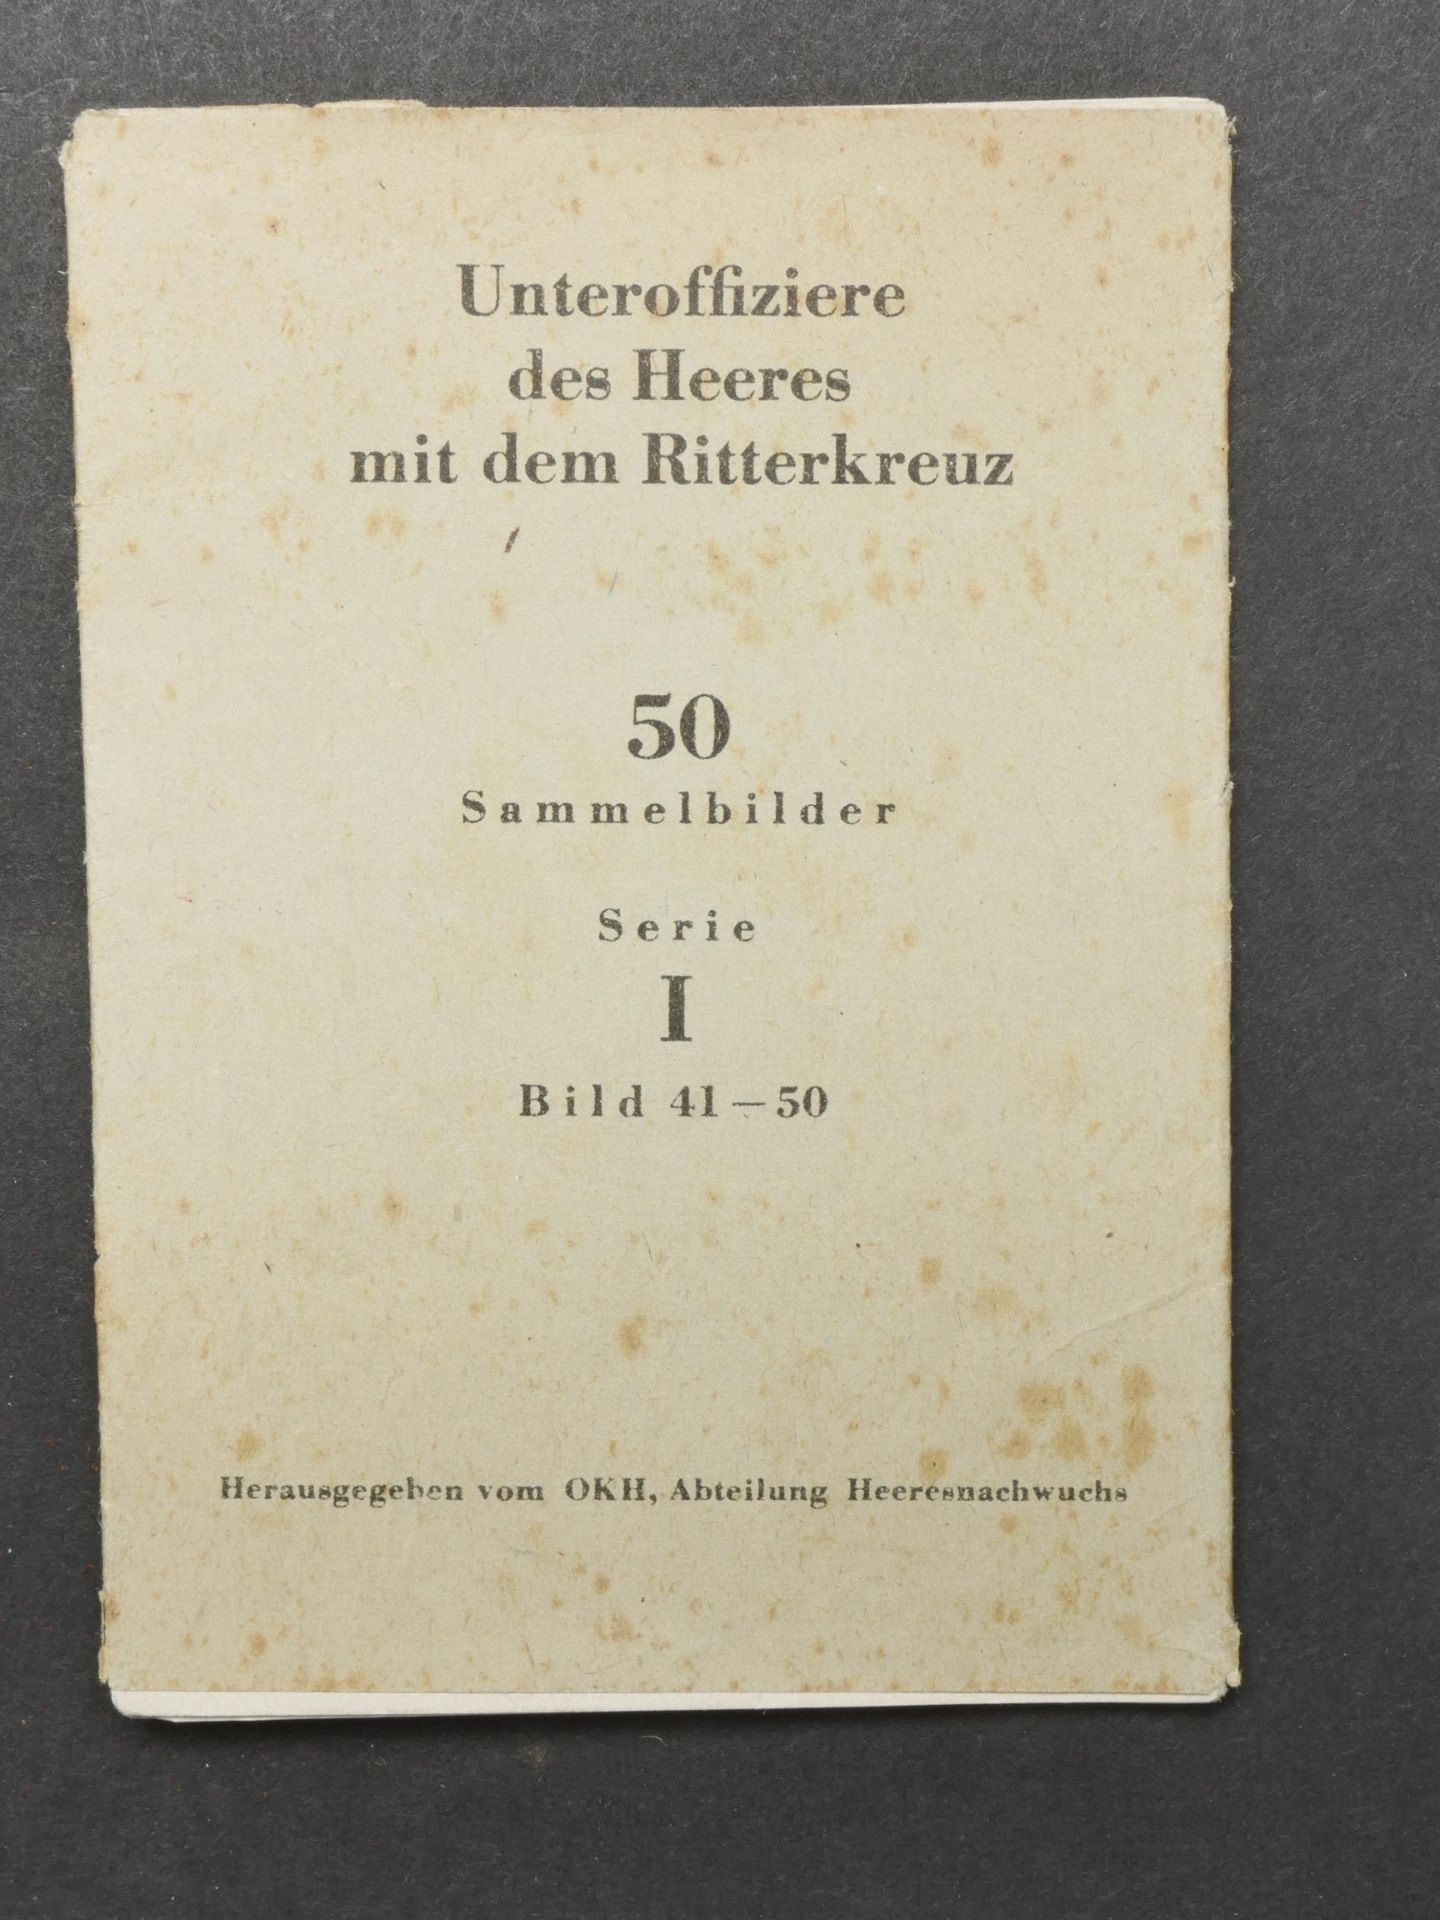 Livret Unteroffiziere des Heeres. Booklet Unteroffiziere des Heeres.  - Image 4 of 5